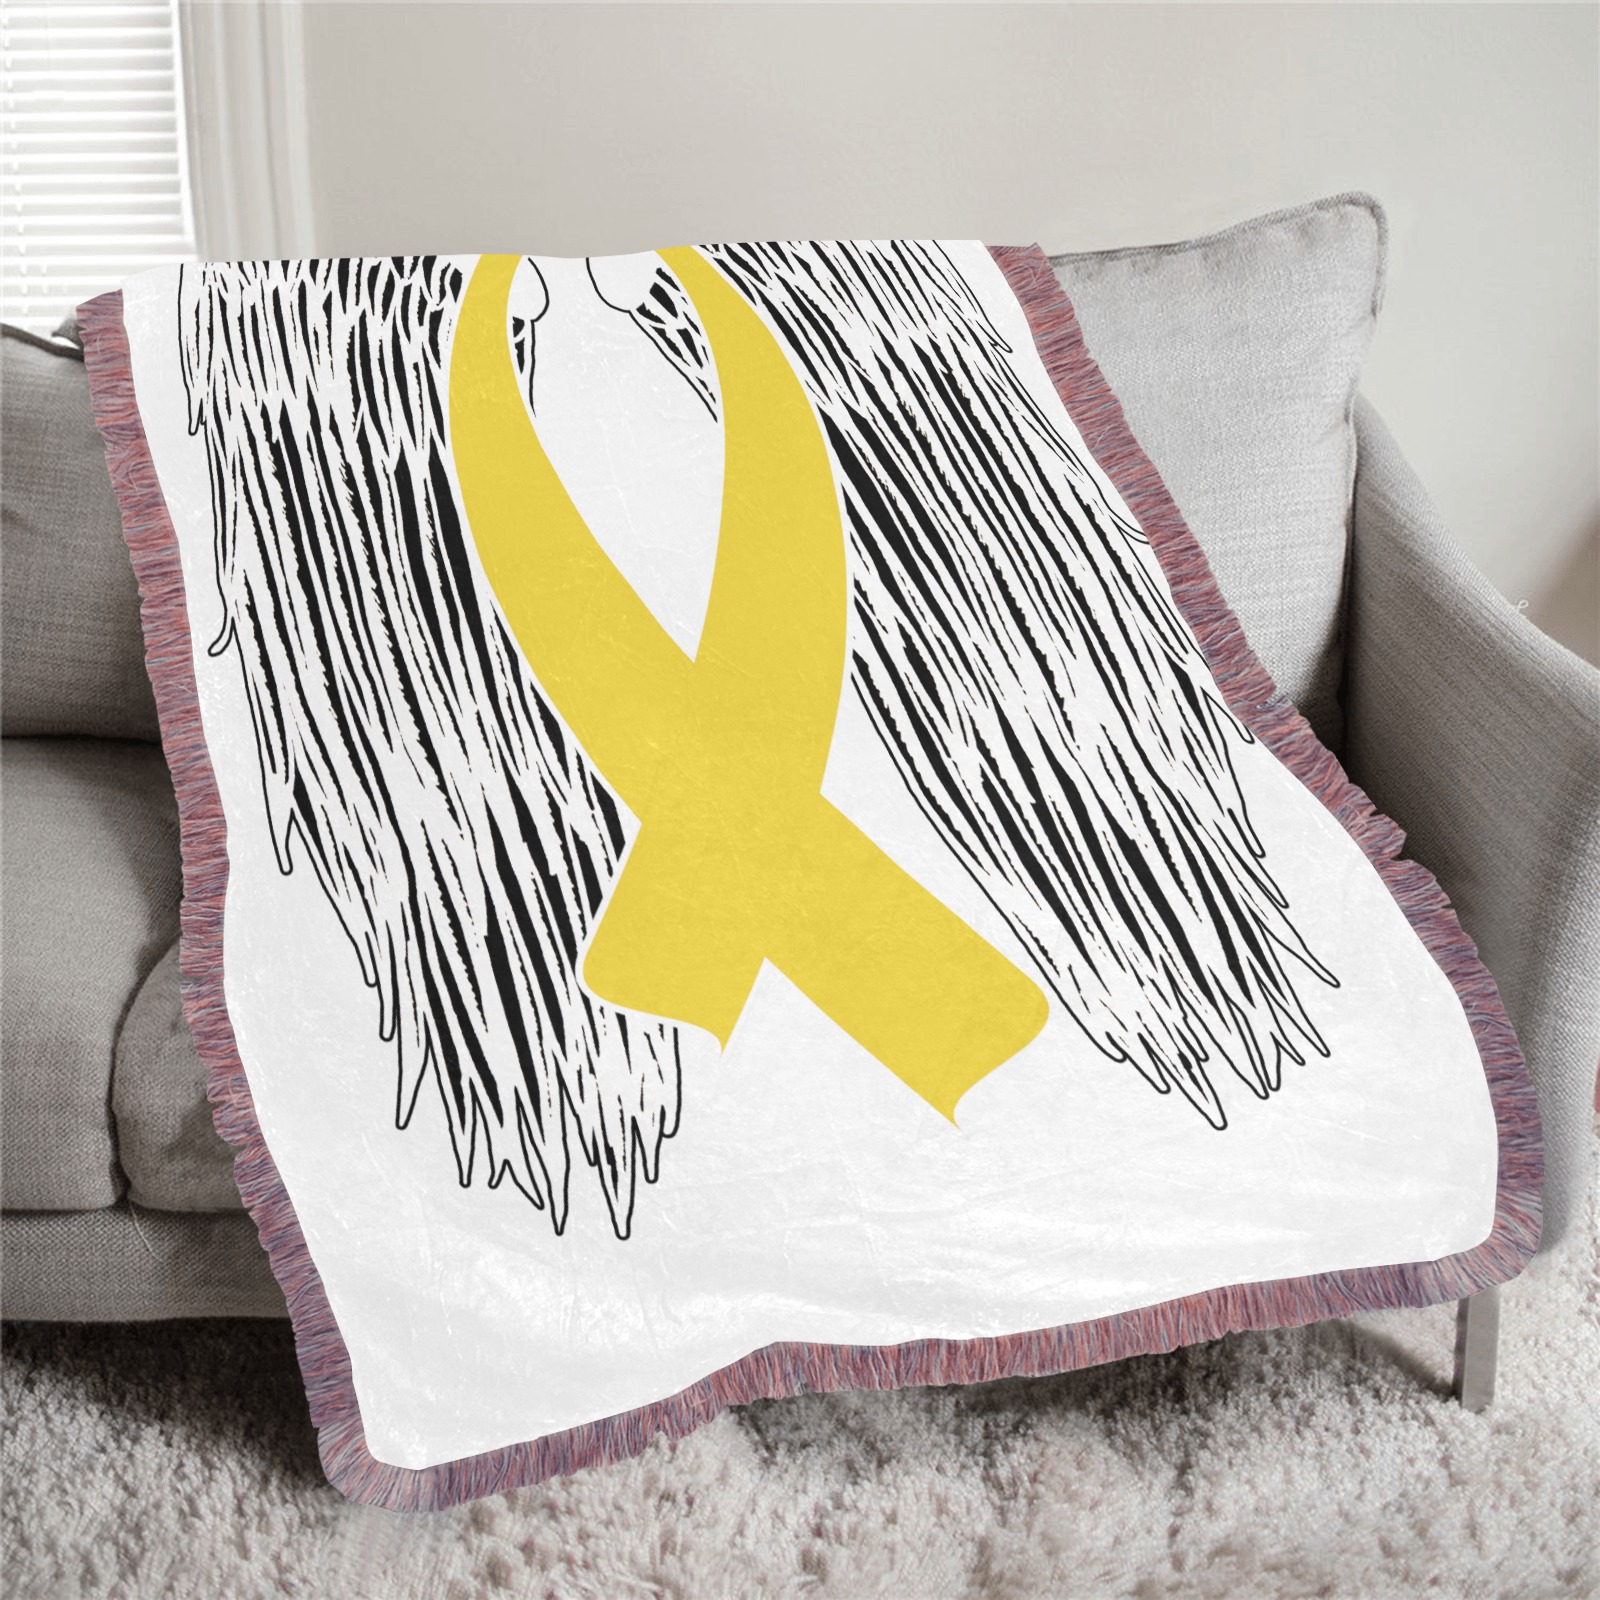 Winged Awareness Ribbon (Gold Ribbon) Ultra-Soft Fringe Blanket 30"x40" (Mixed Pink)